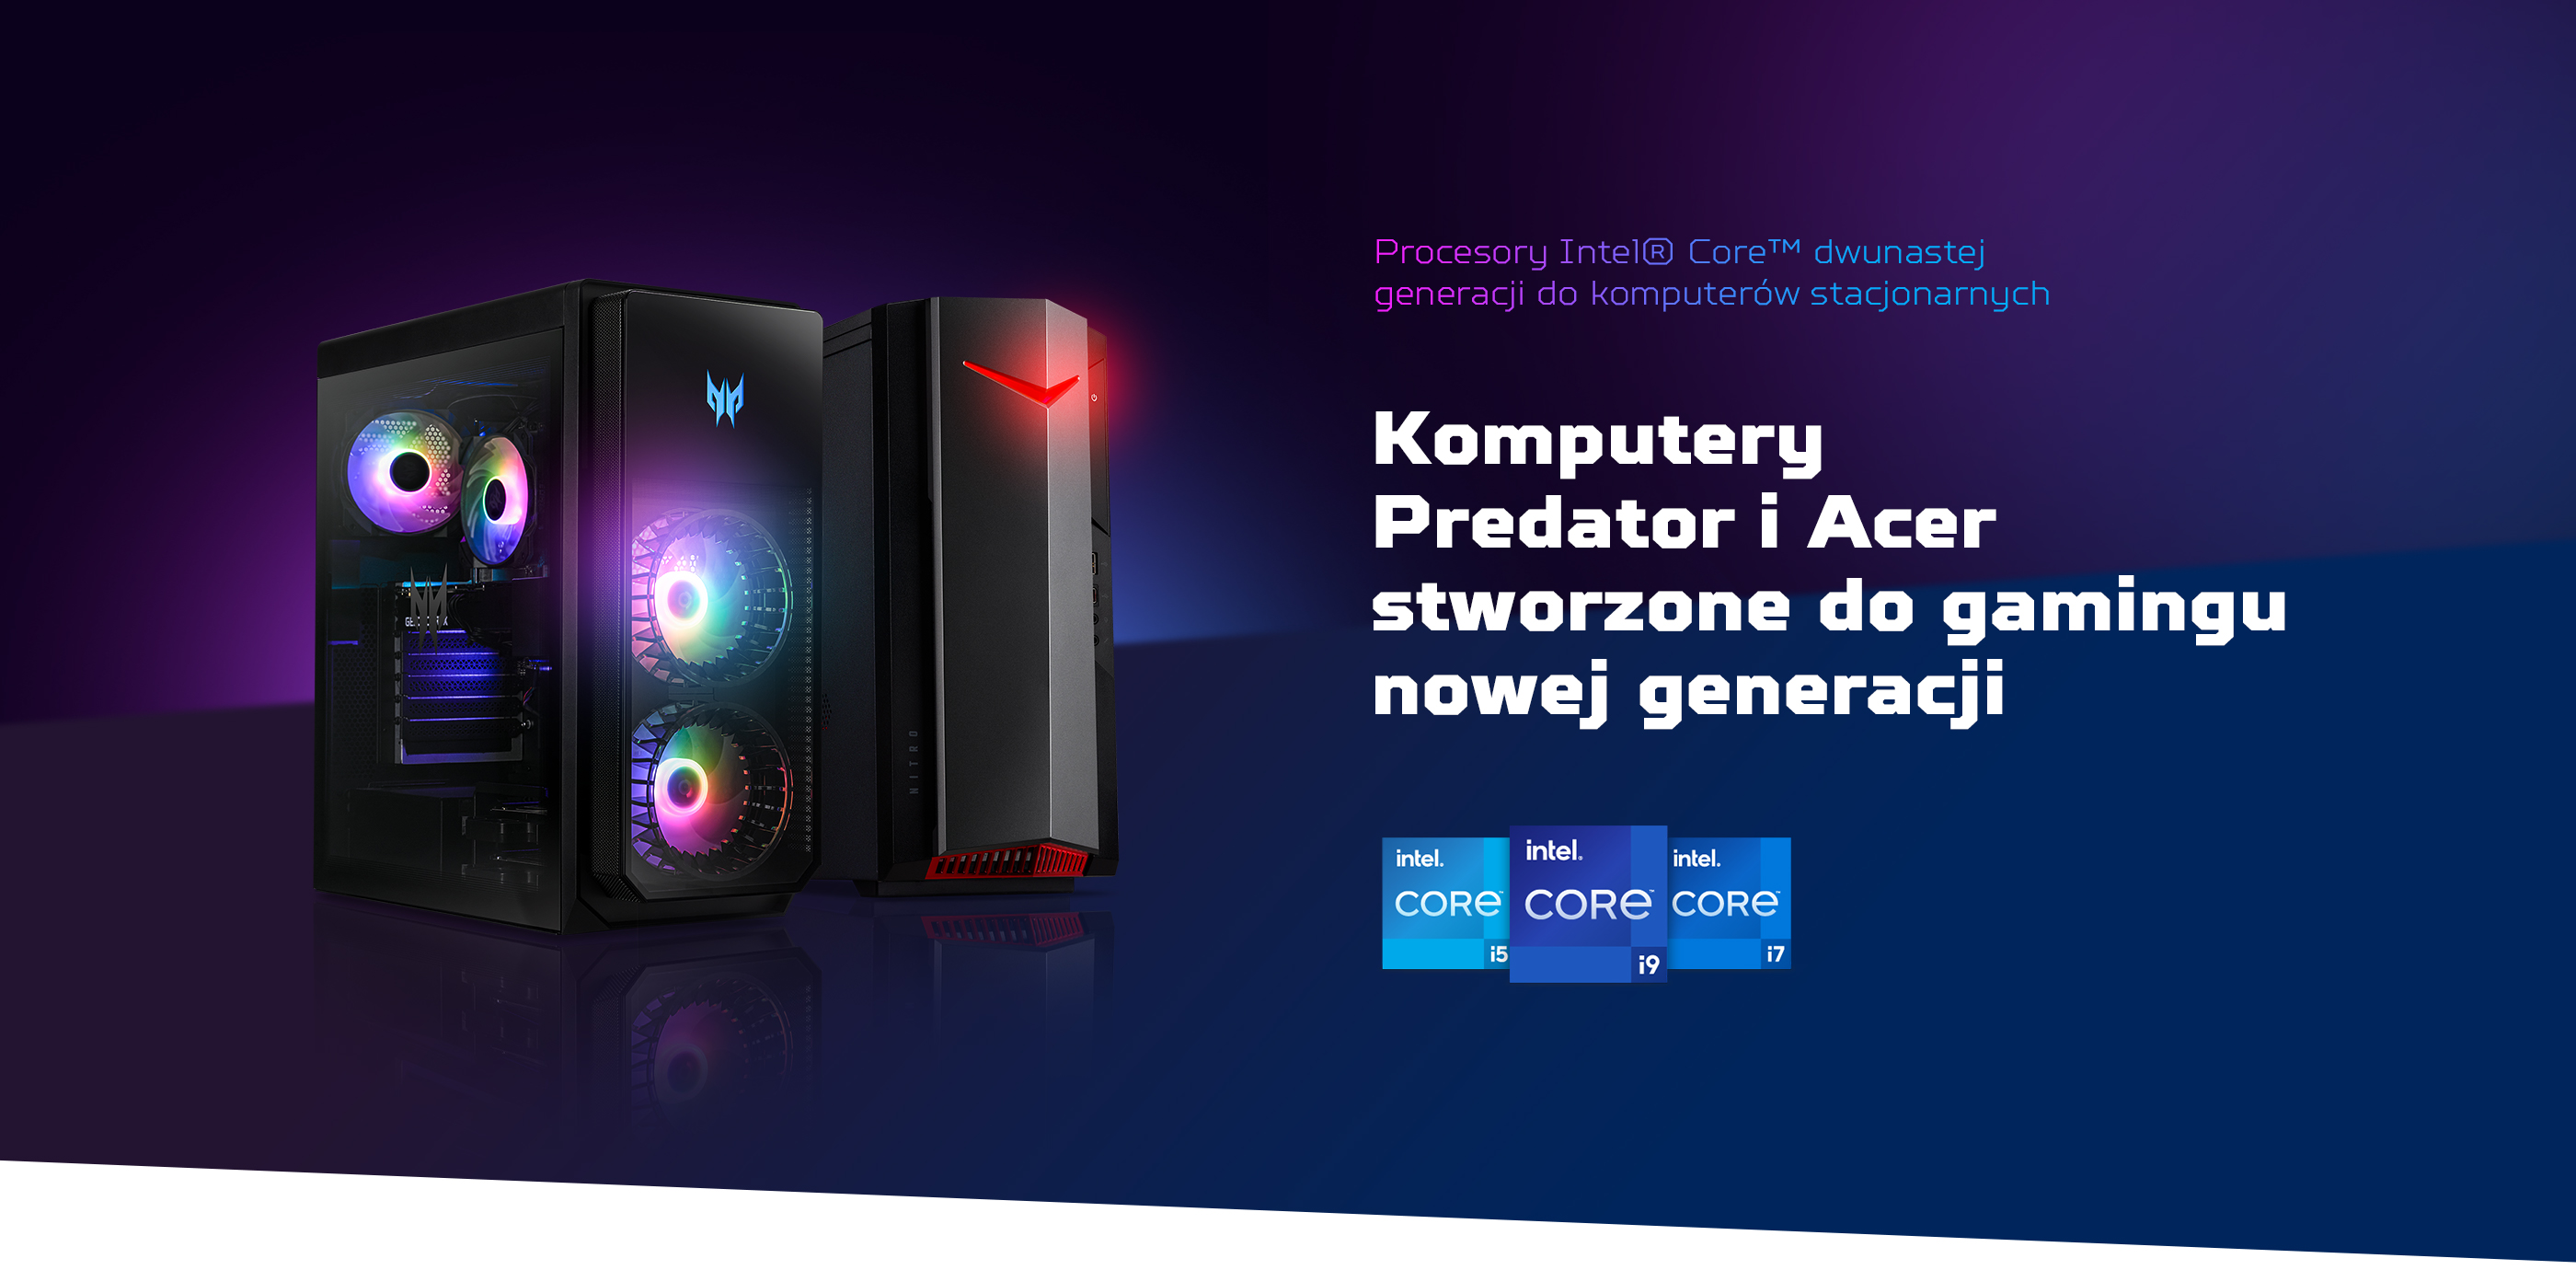 Komputery predator i Acer